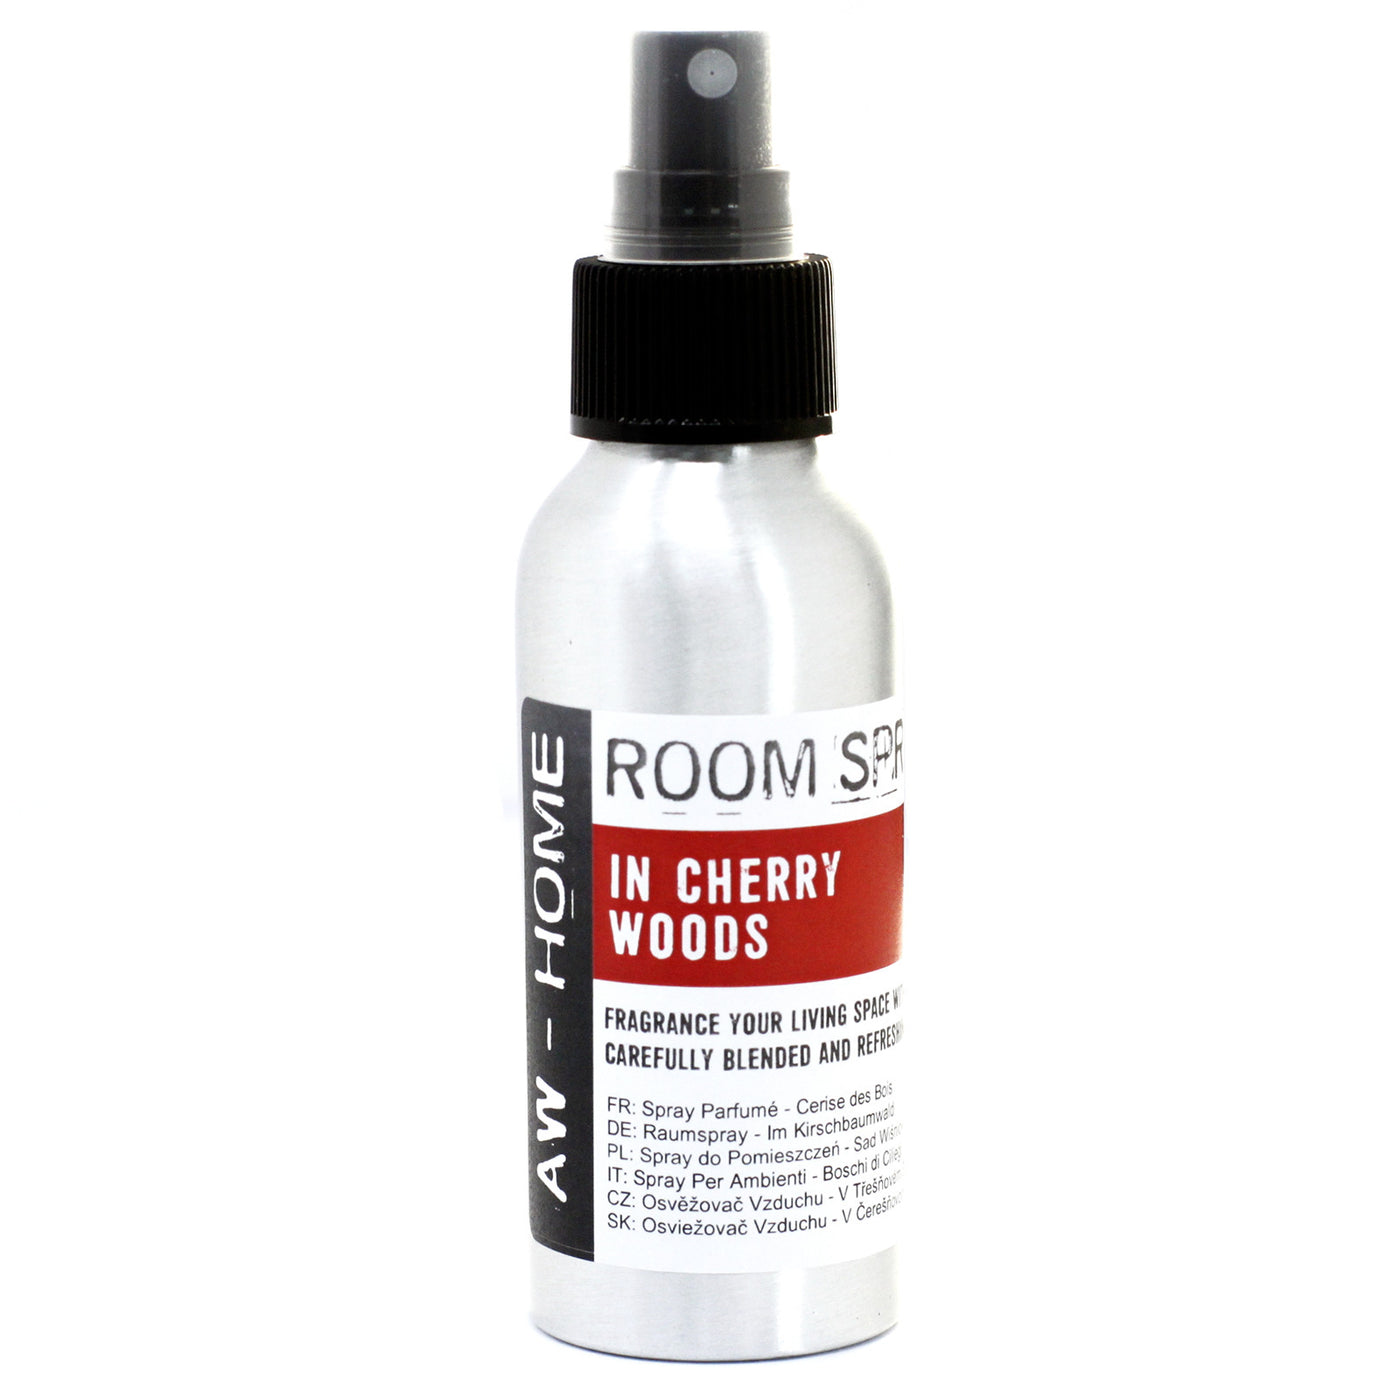 In Cherry Woods Home Room Sprays 100ml.